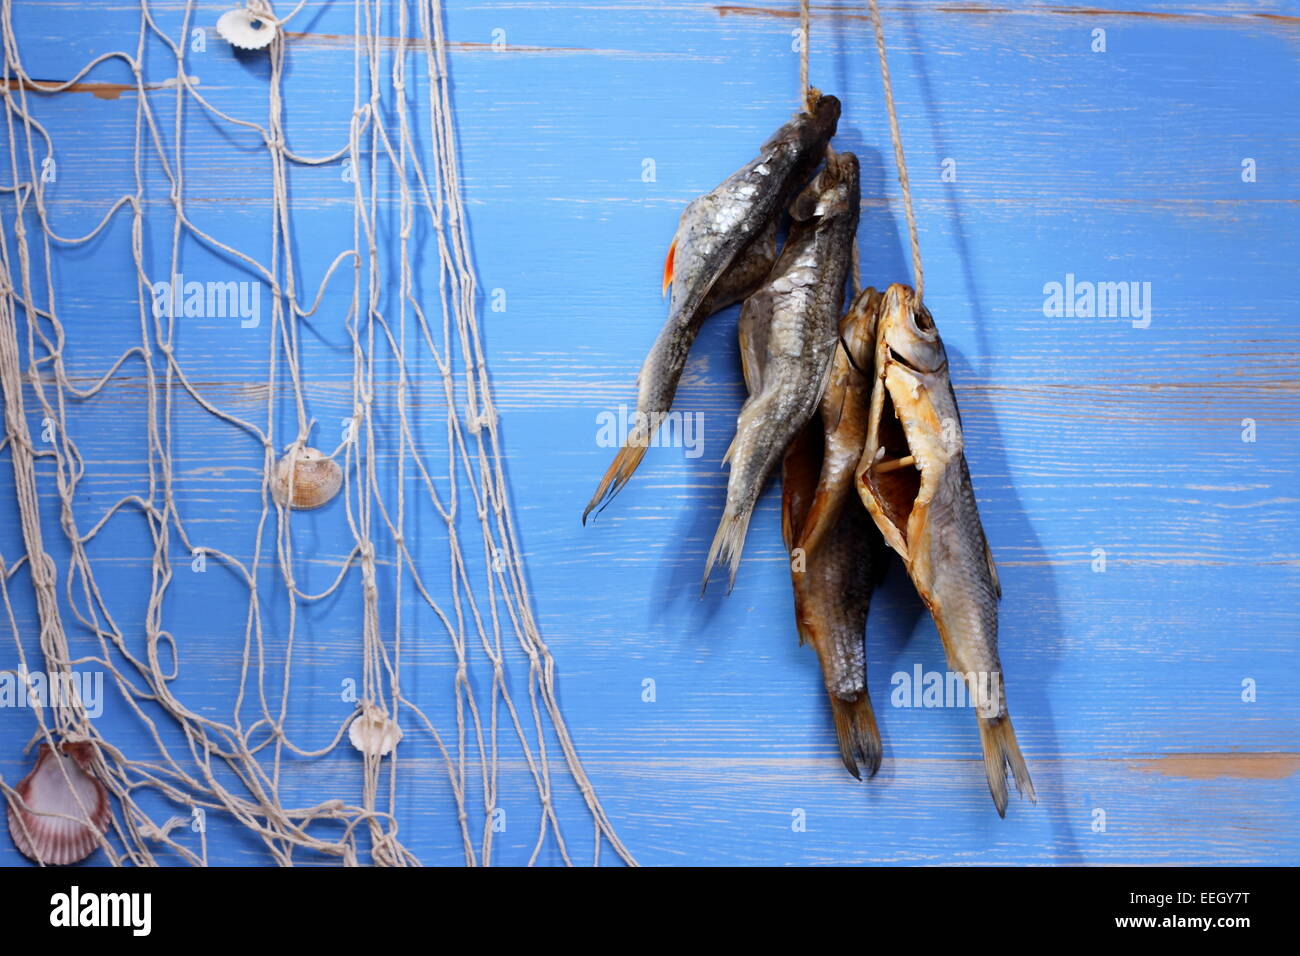 https://c8.alamy.com/comp/EEGY7T/dried-rudd-fish-and-fishing-net-on-blue-background-horizontal-EEGY7T.jpg